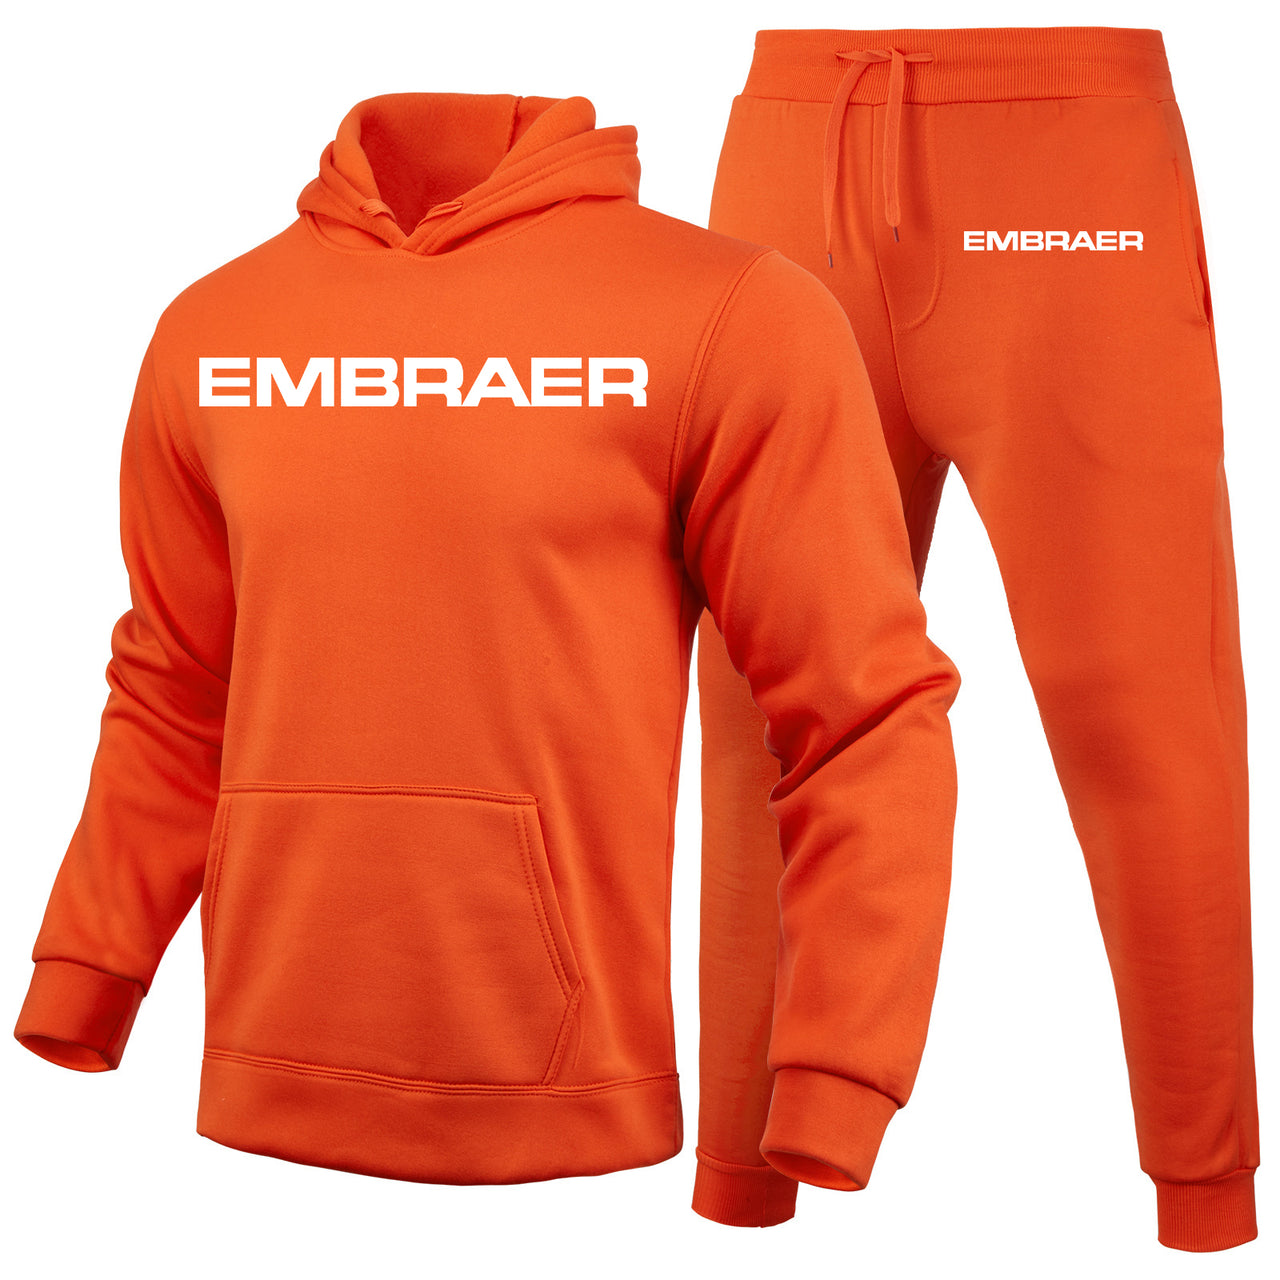 Embraer & Text Designed Hoodies & Sweatpants Set